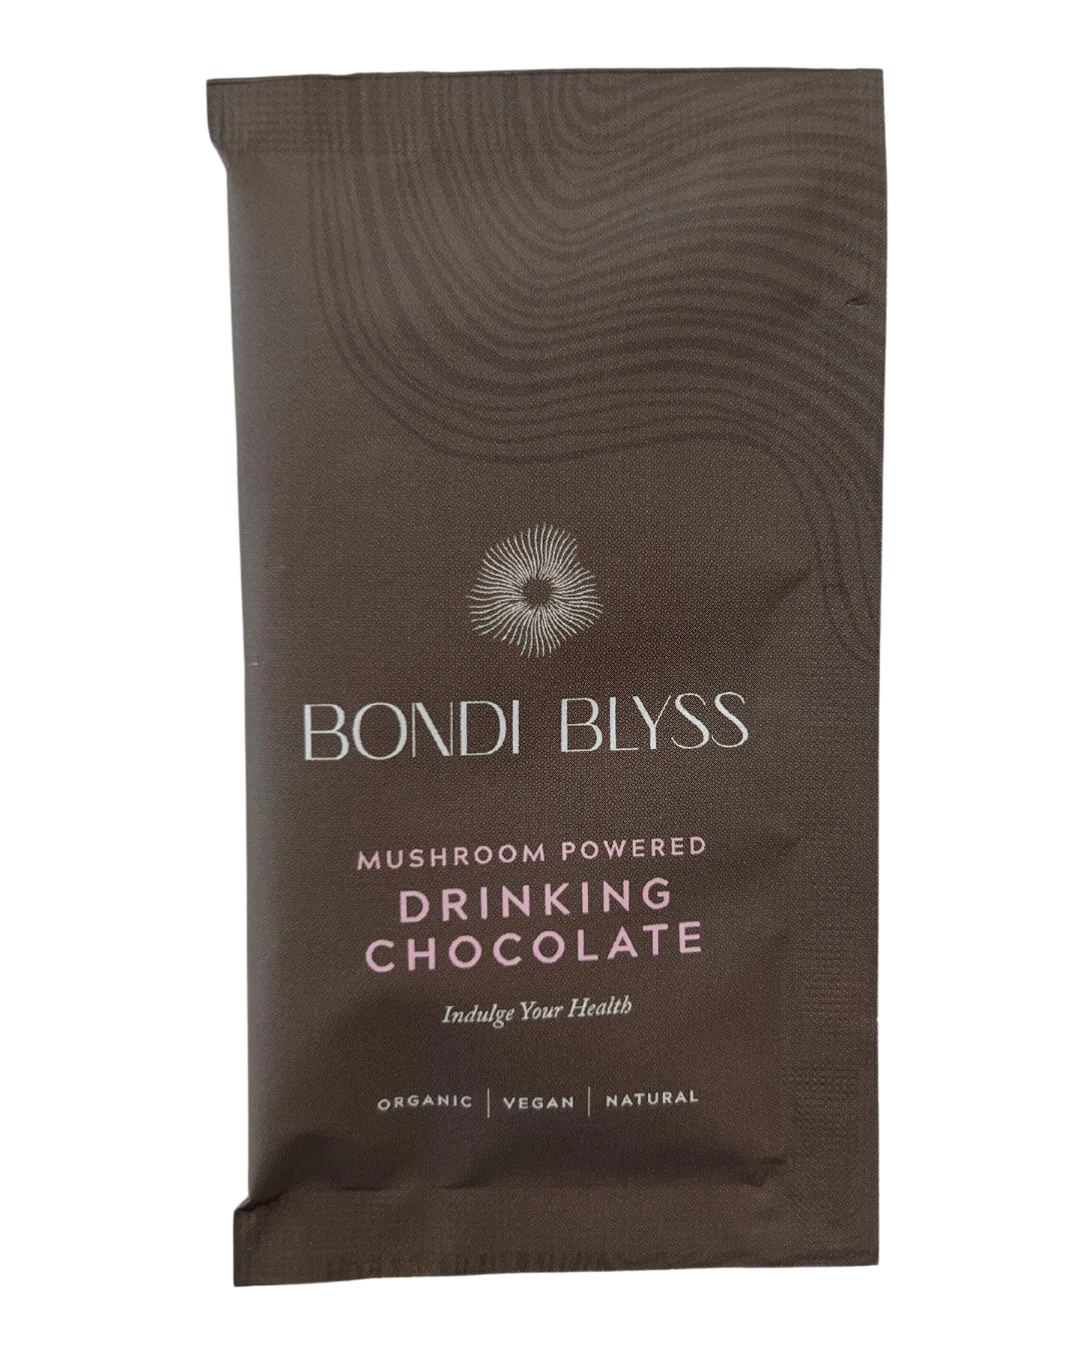 Bondi Blyss Mushroom Powered Blend Single Serve Or A Box Of 12 Serves, Drinking Chocolate